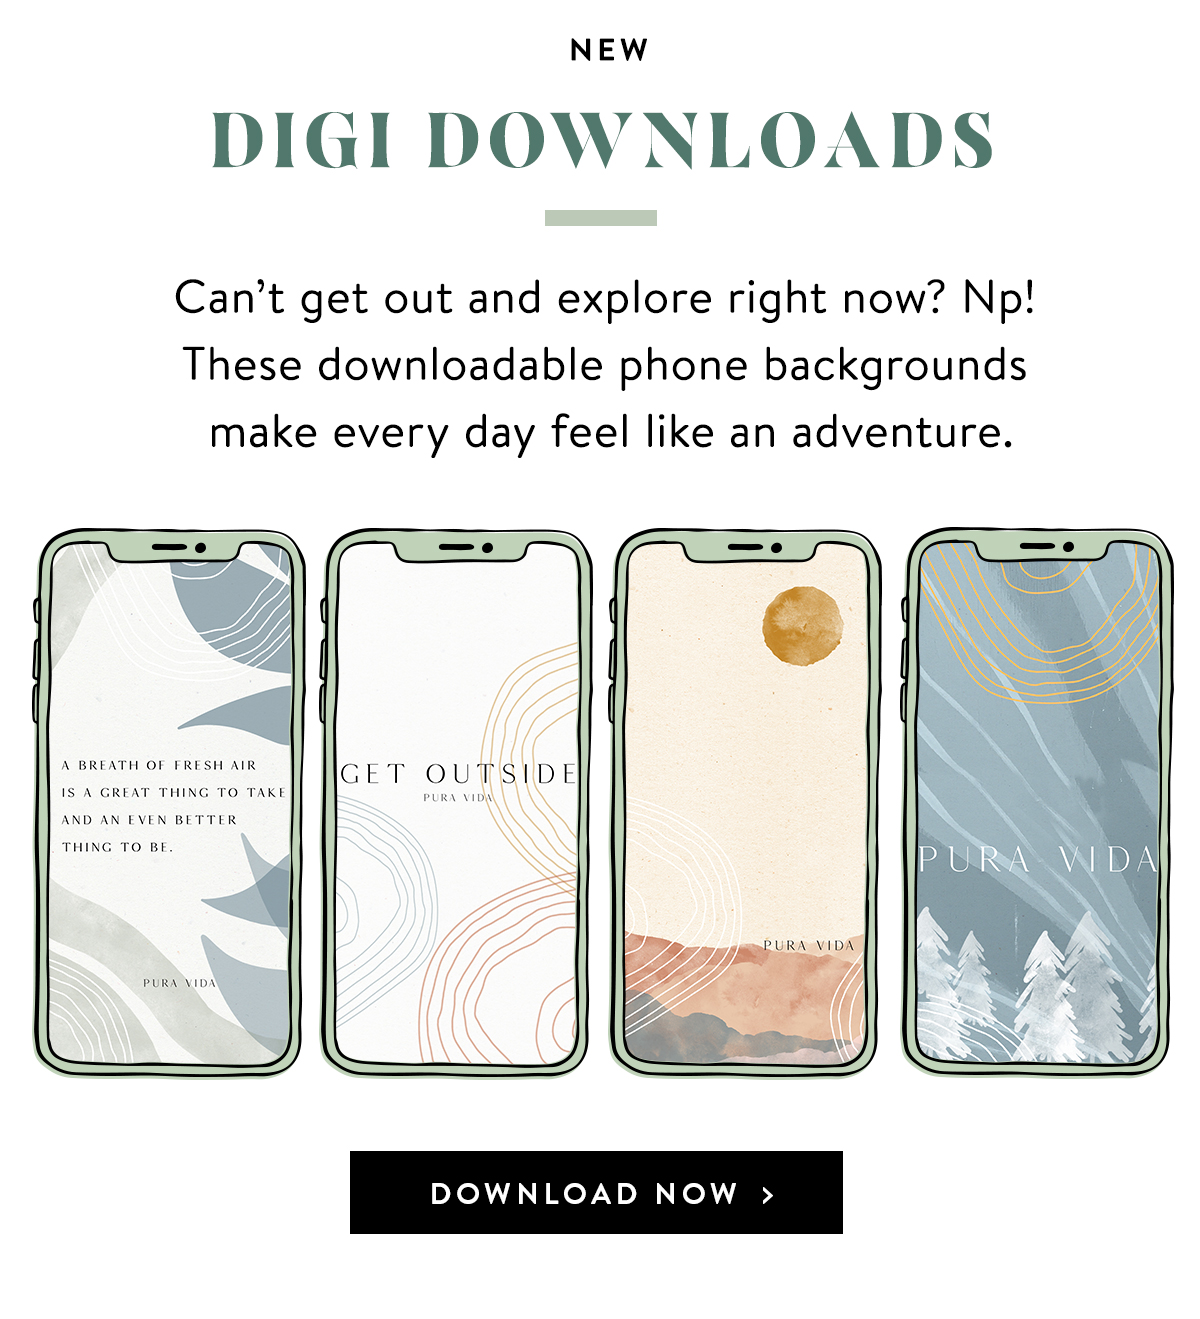 Digi Downloads | DOWNLOAD NOW >